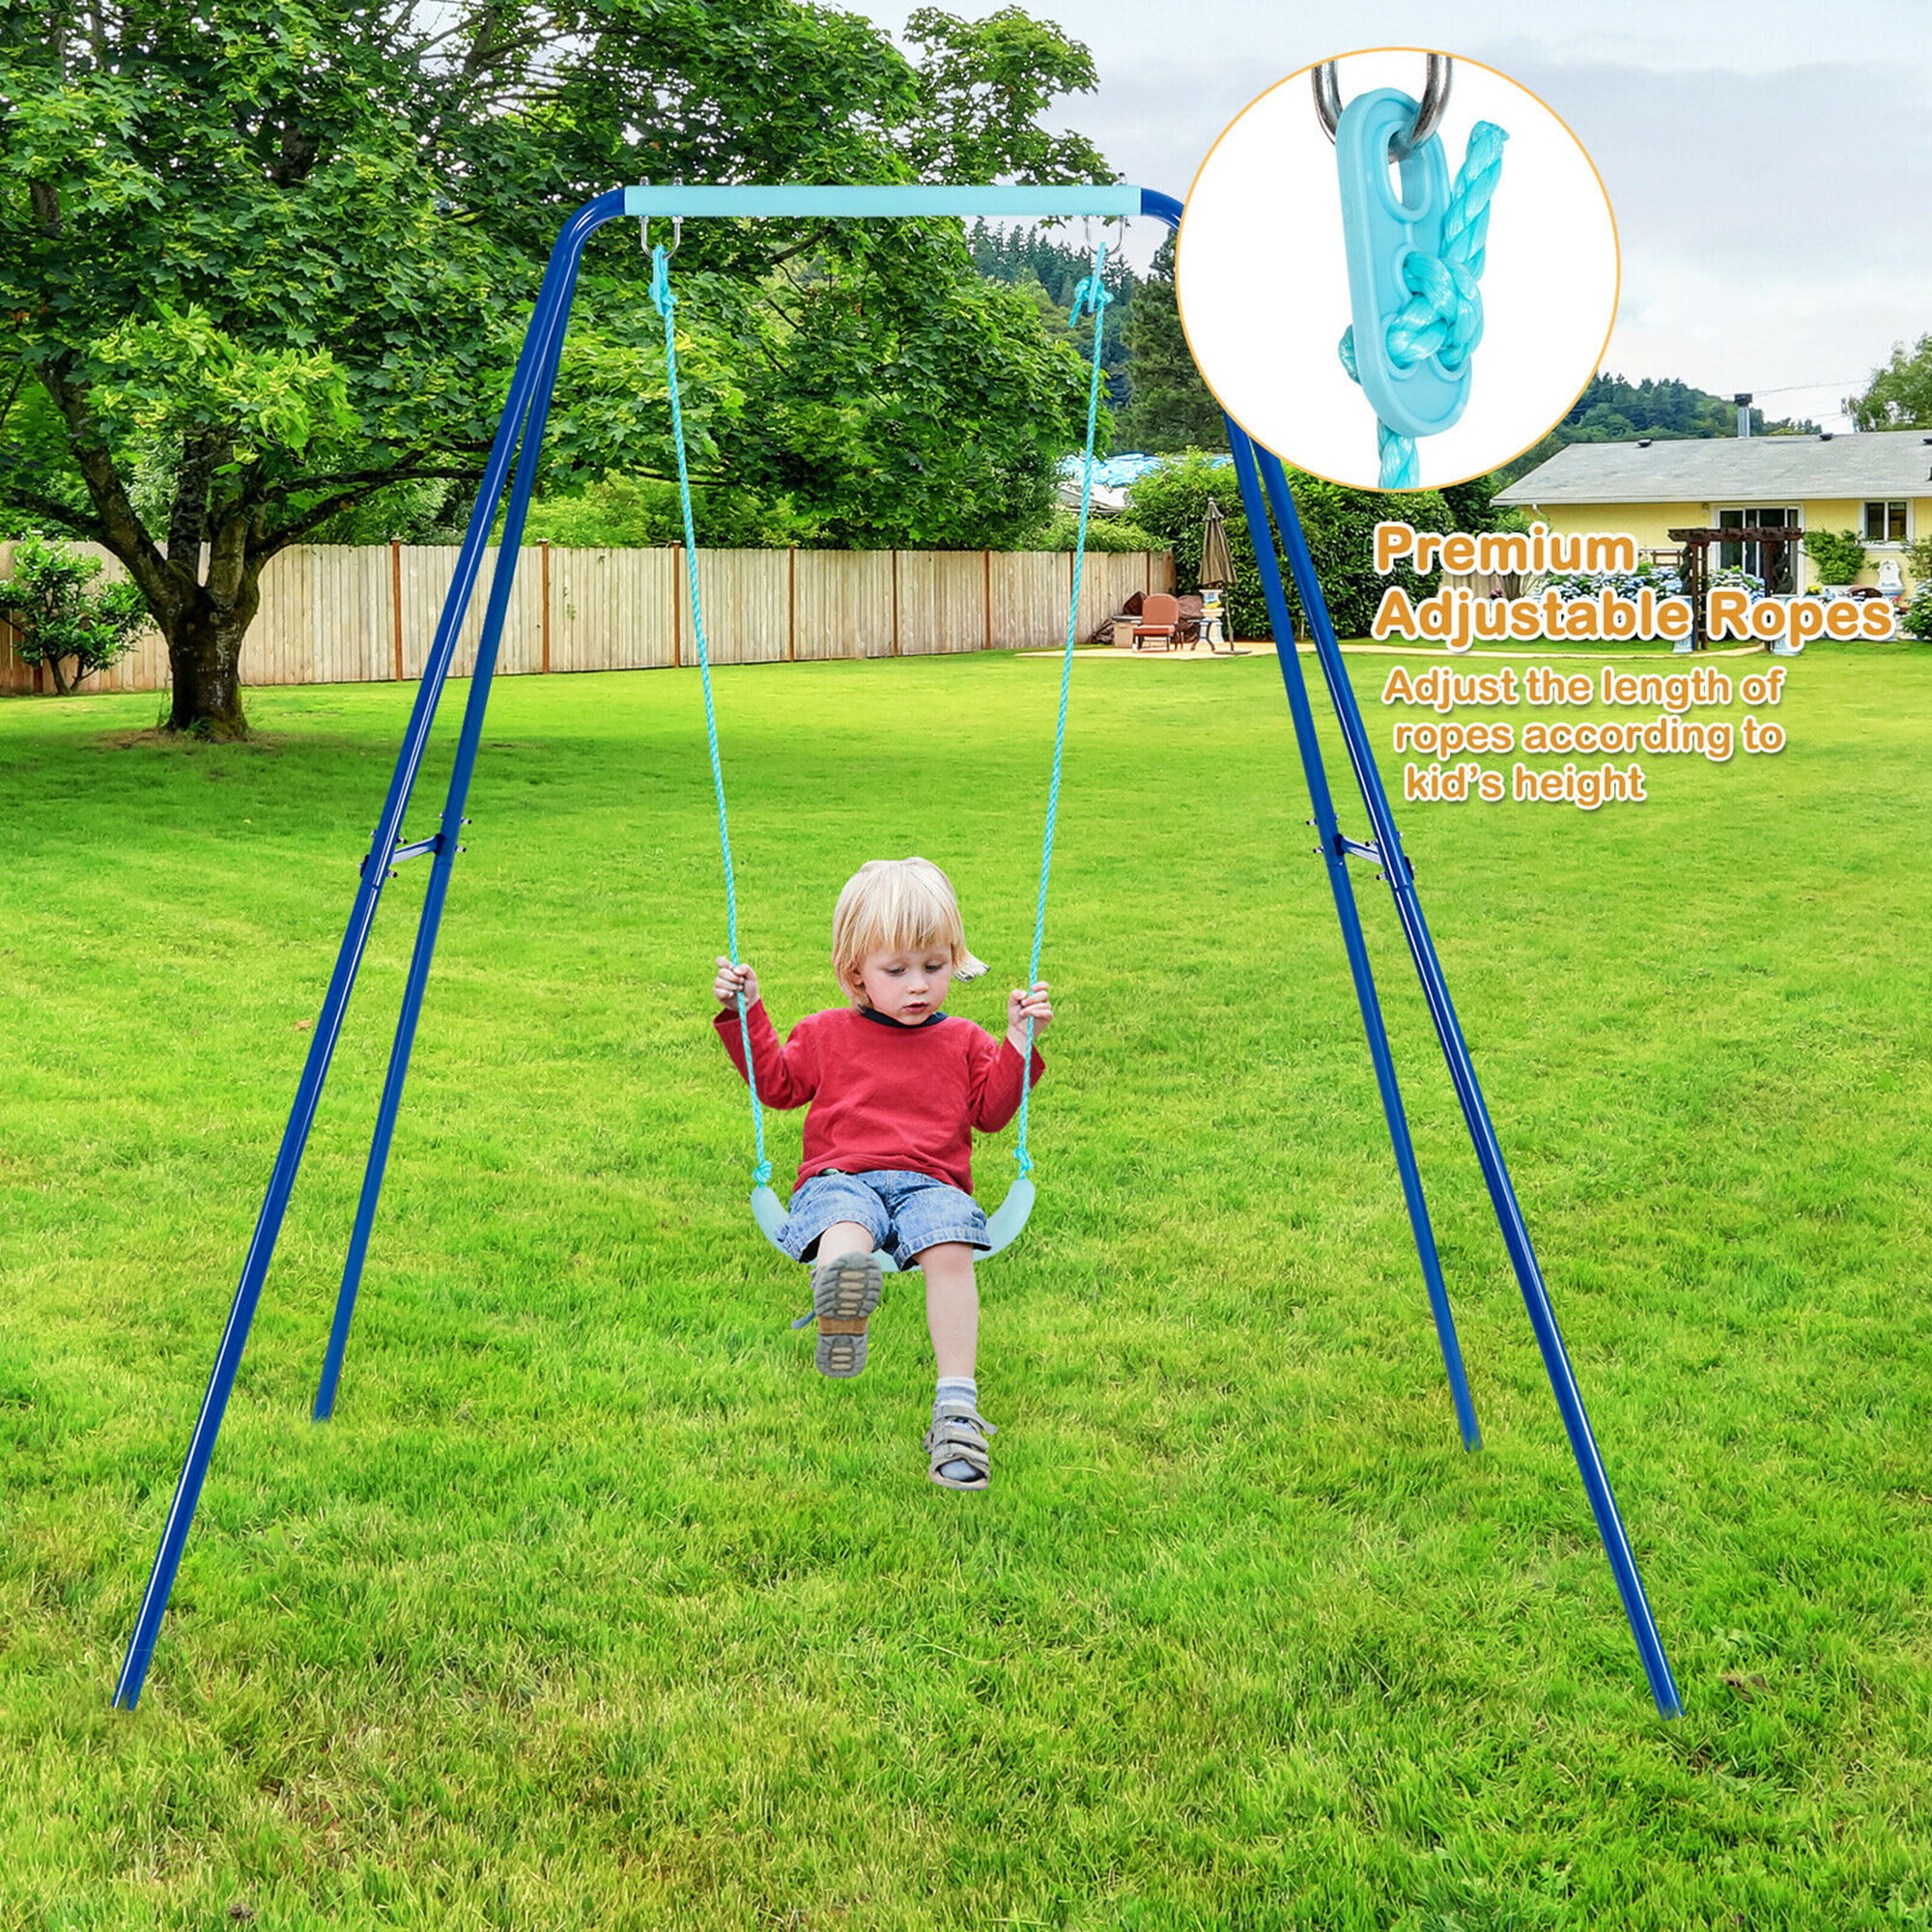 Heavy Duty Swing Seat W/ Adjustable Ropes Kid Garden Outdoor Play Swing Seat Toy 